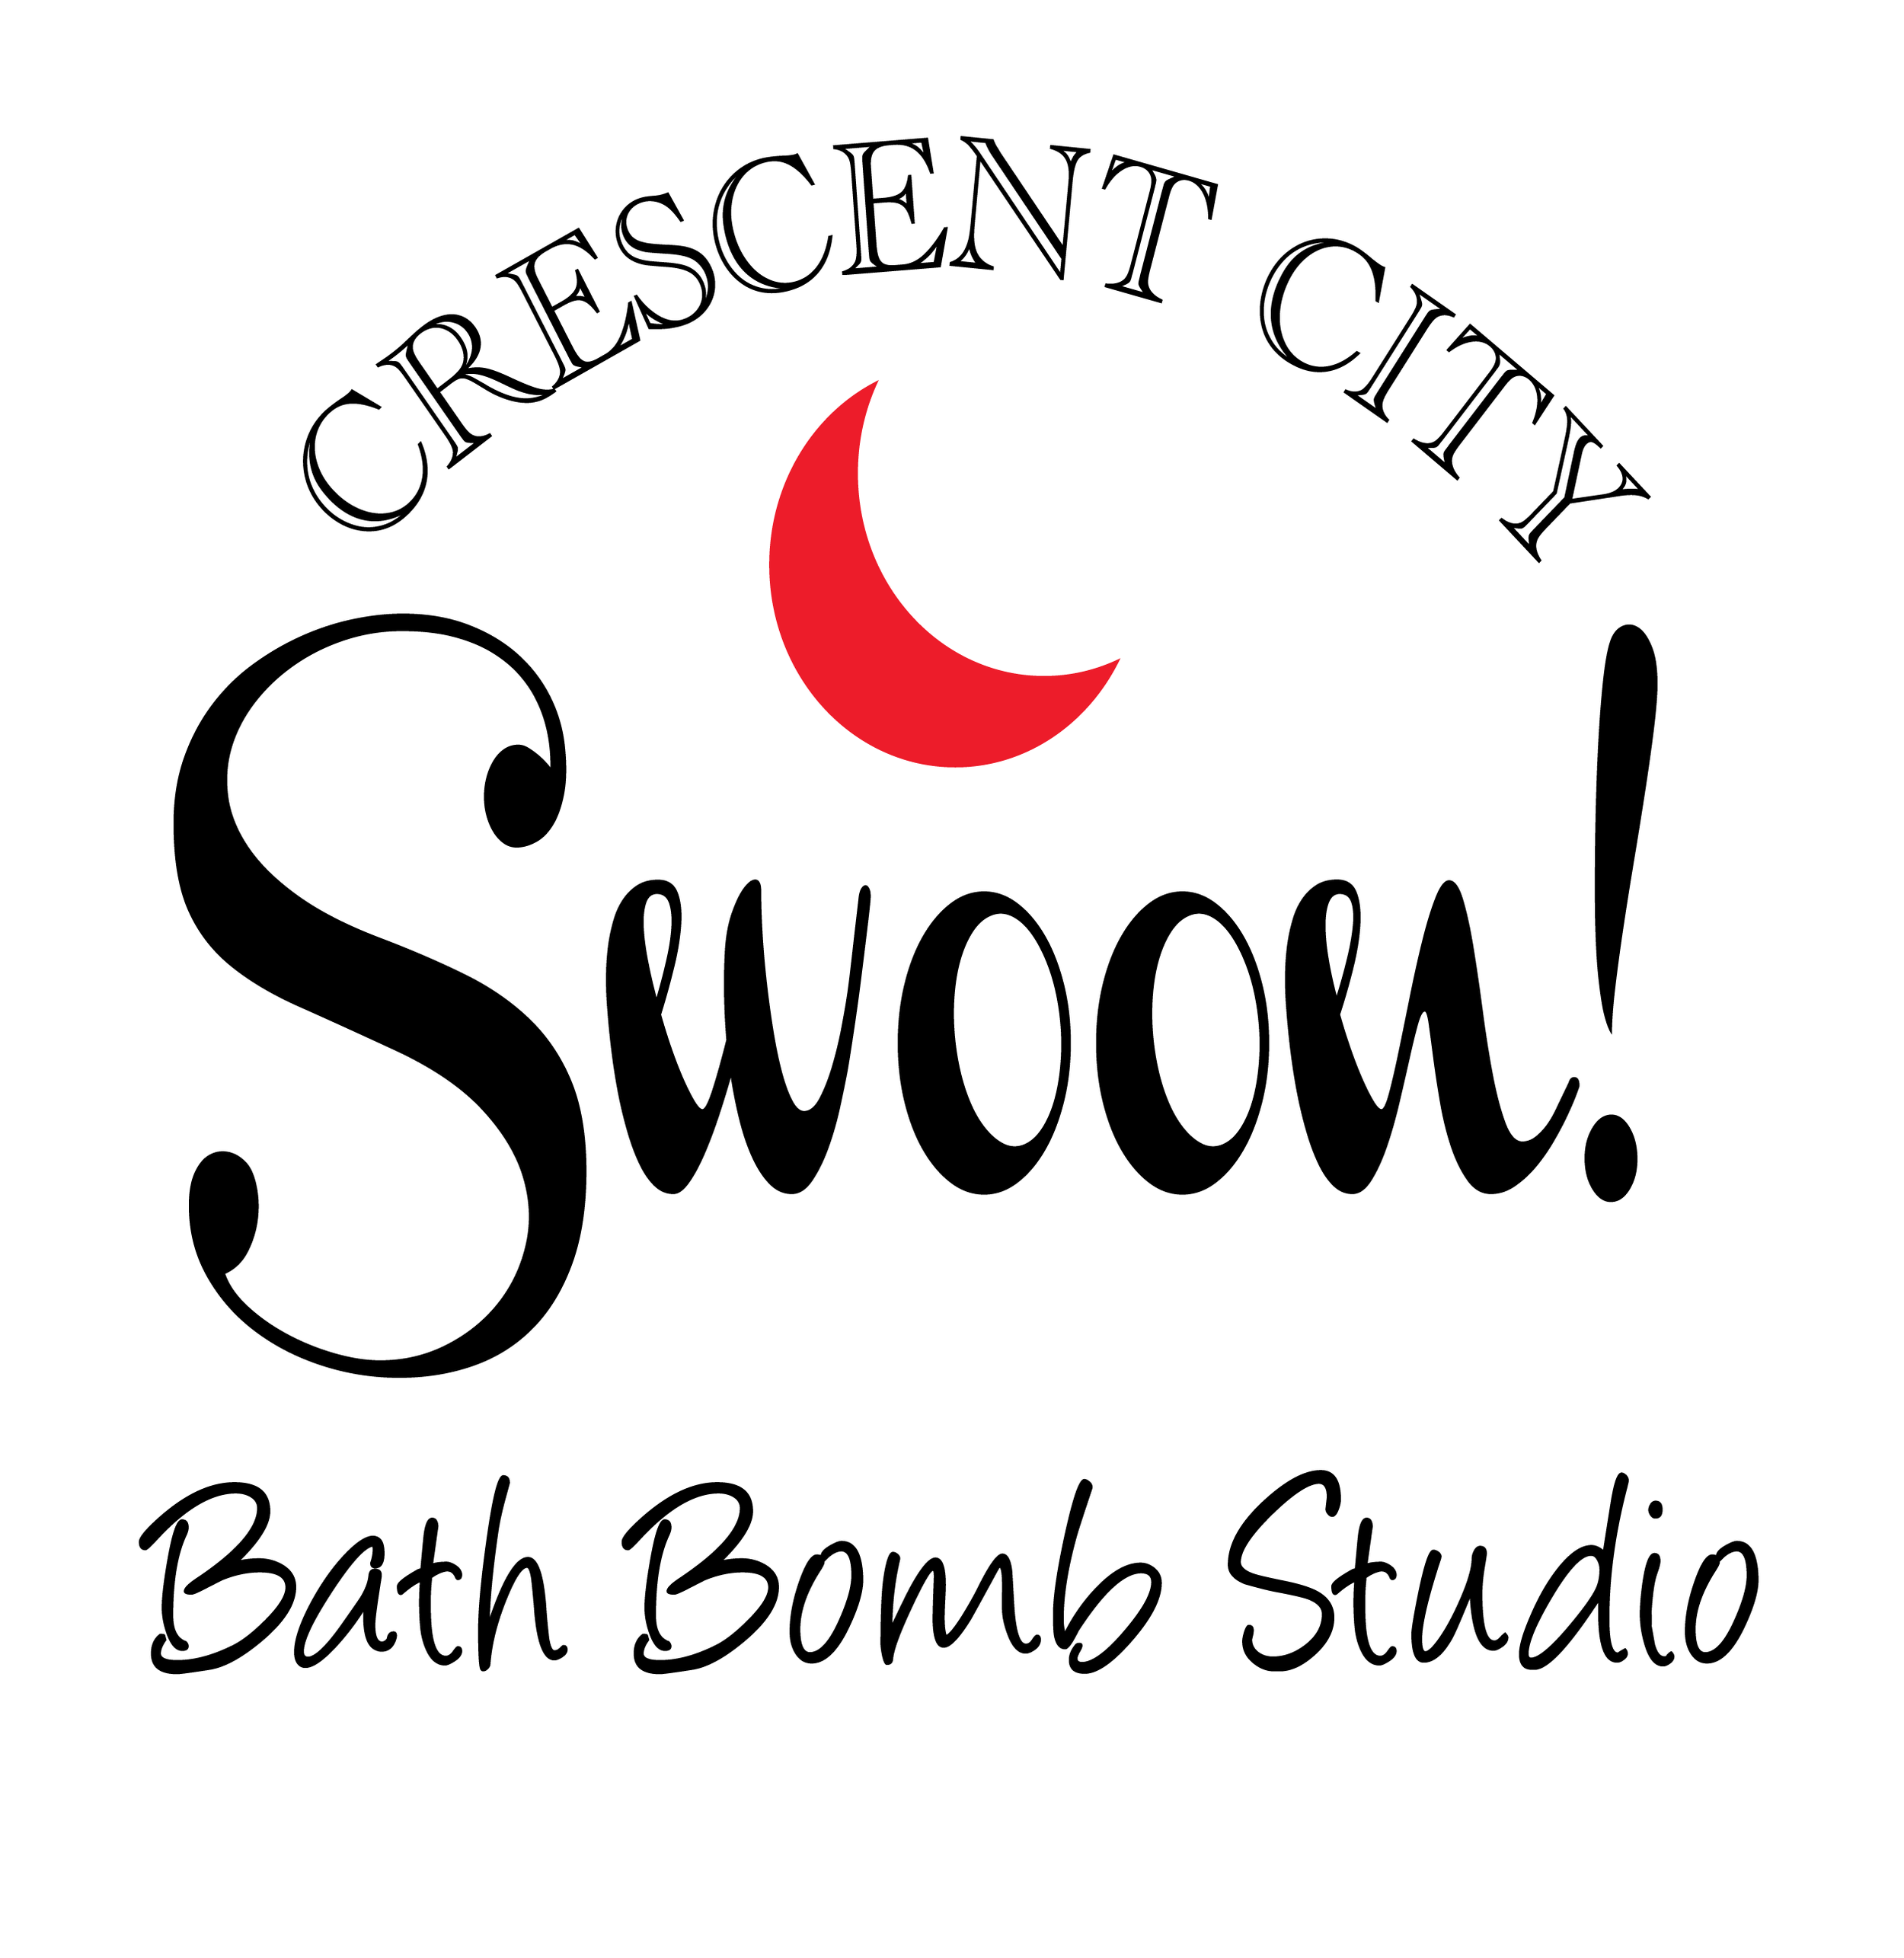 Crescent City Swoon